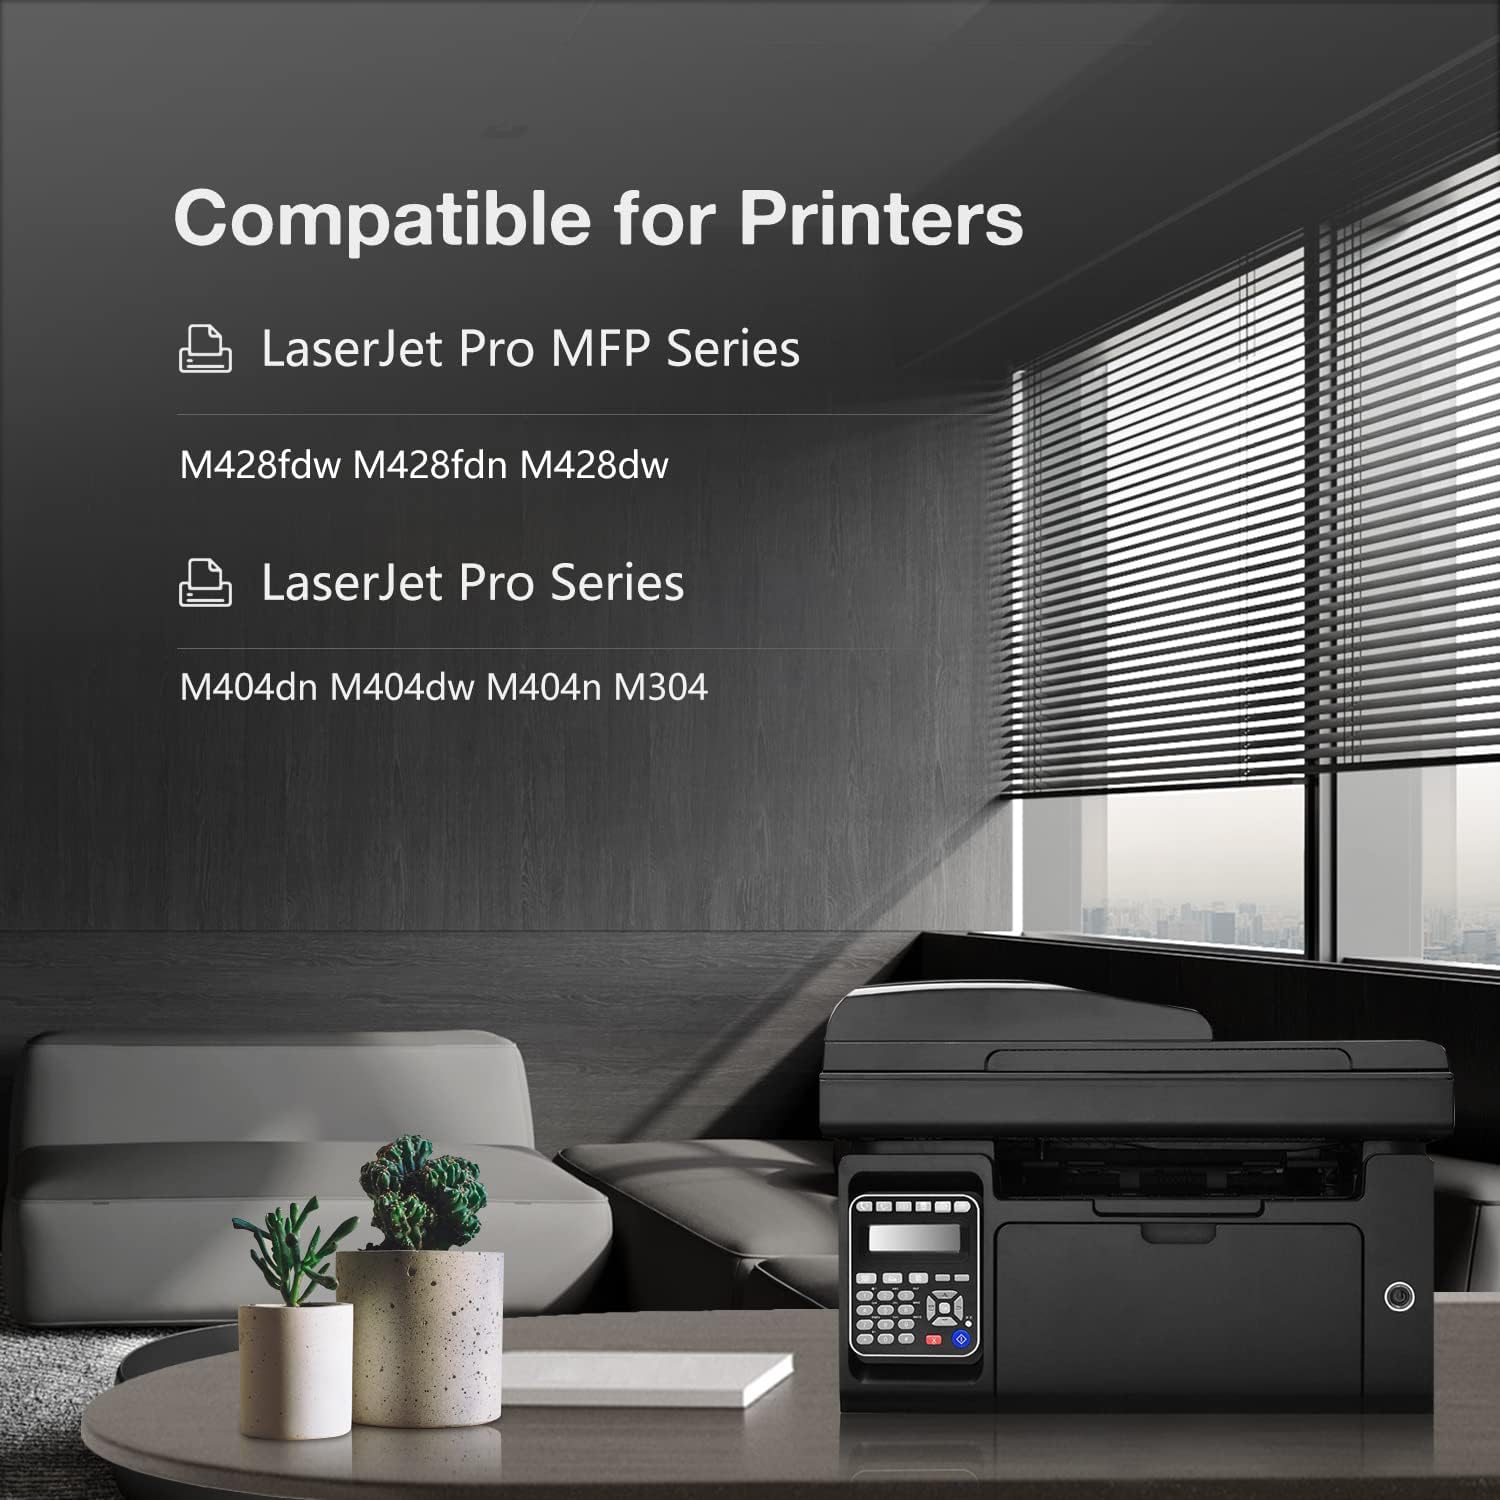 Compatible printer models for LEEMRO 58A toner cartridges, including LaserJet Pro MFP and Pro Series.